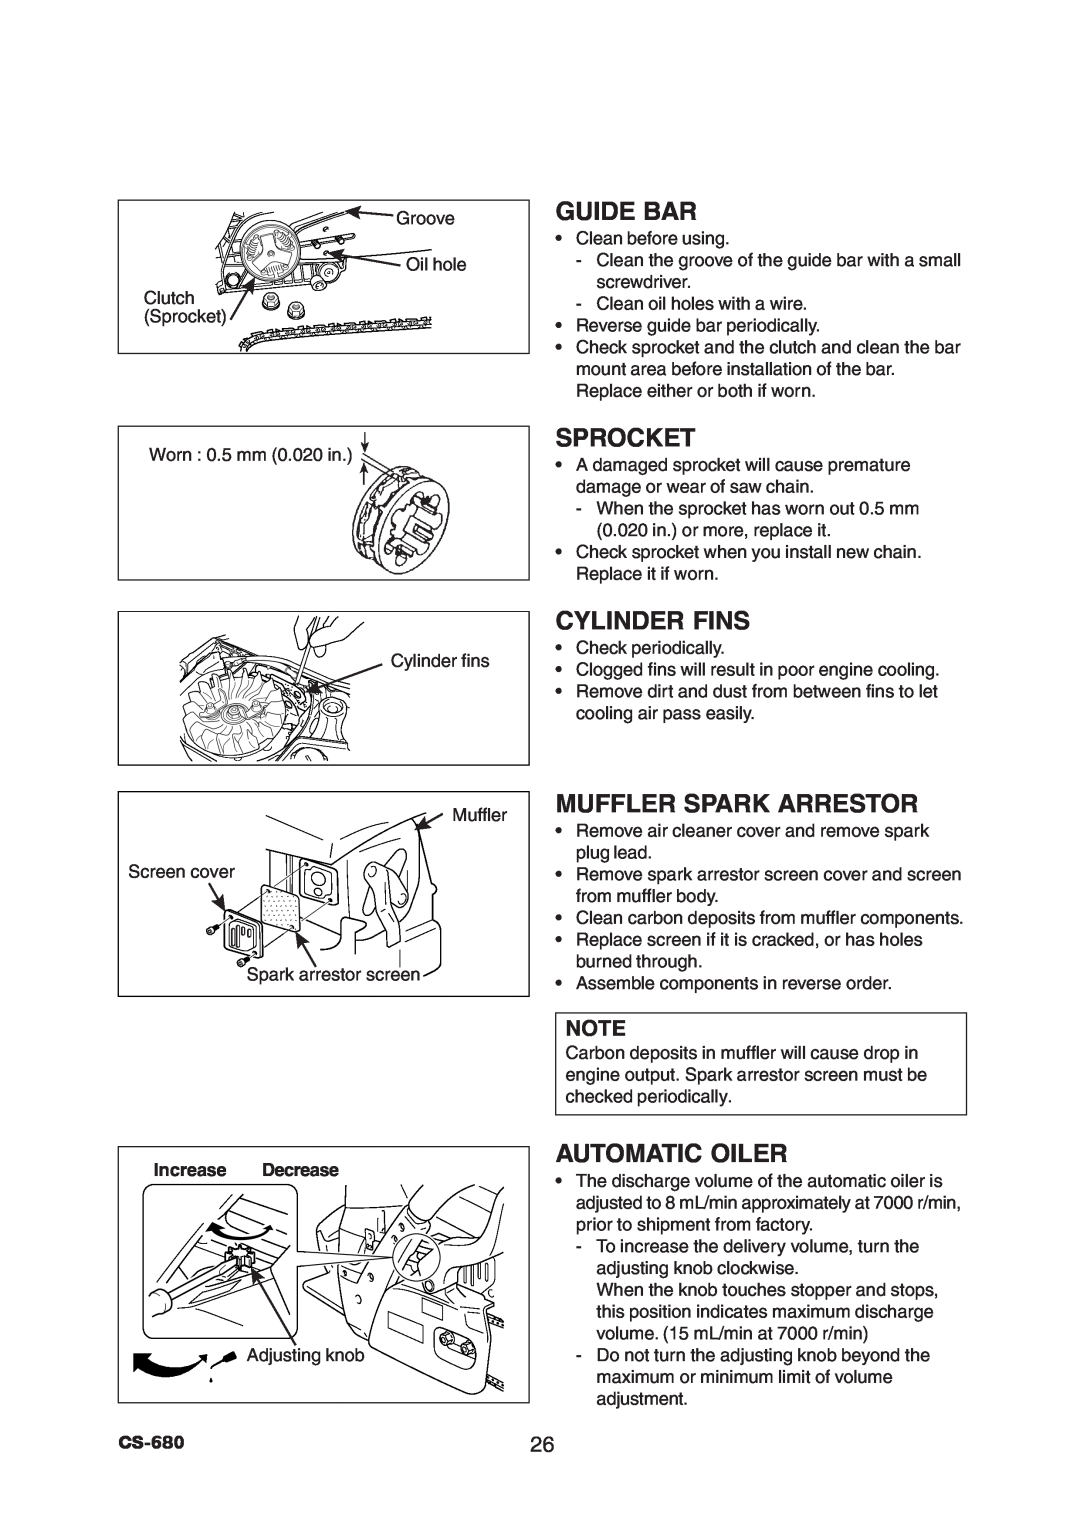 Echo CS-680 instruction manual Sprocket, Cylinder Fins, Muffler Spark Arrestor, Automatic Oiler, Guide Bar 